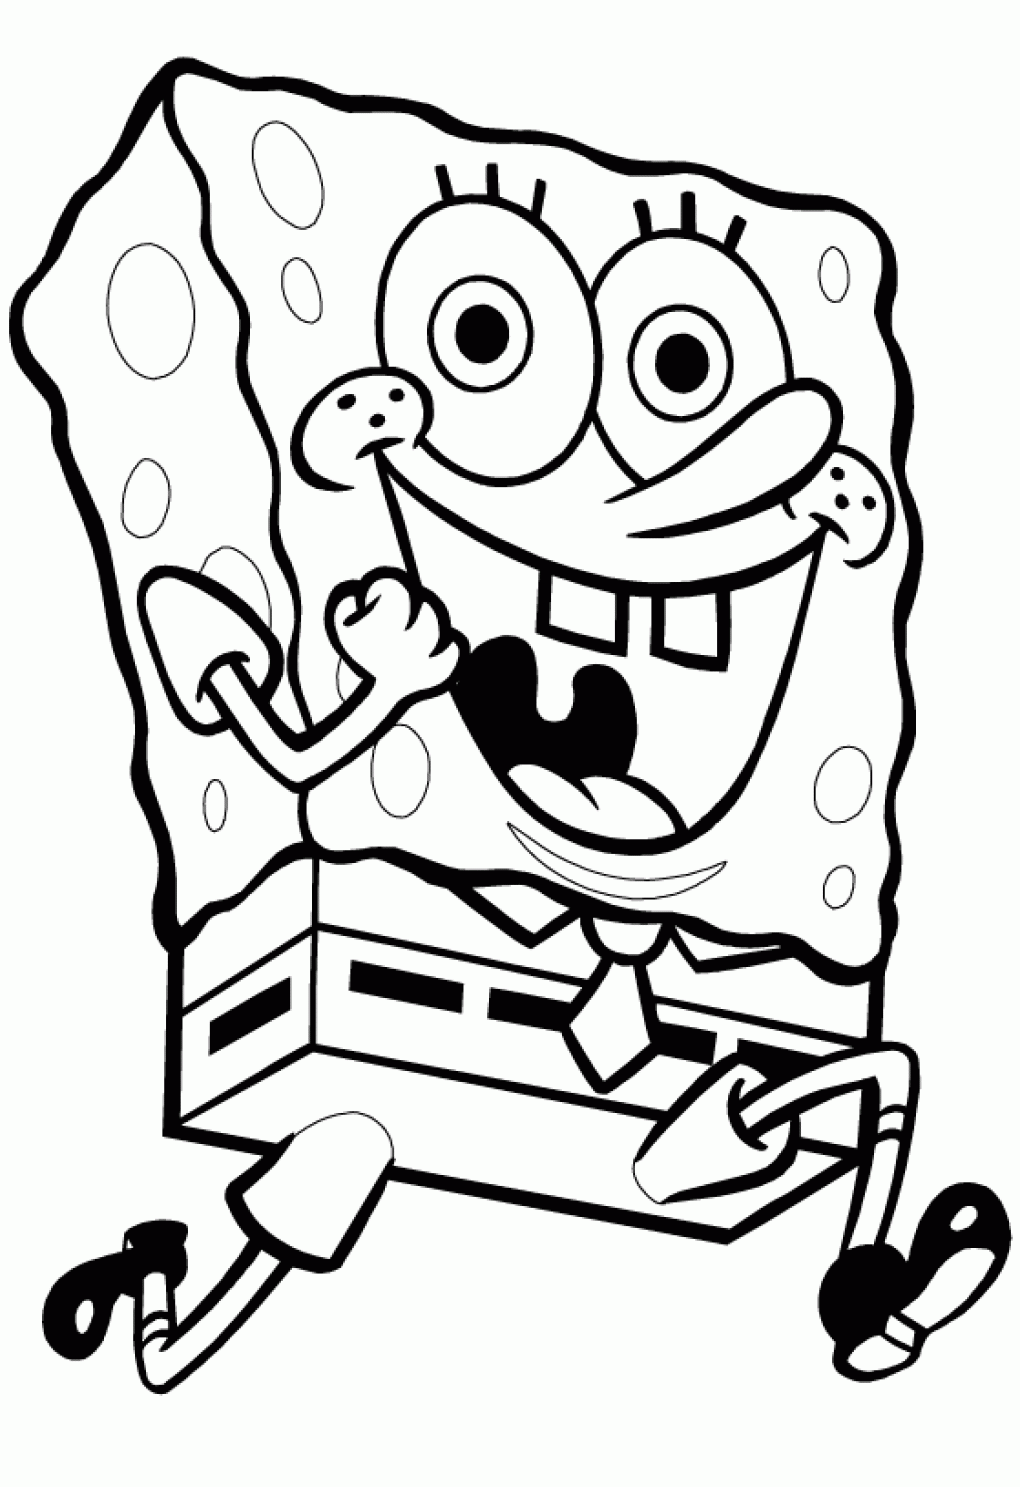 Free Spongebob Squarepants Coloring Pages With Printable Spongebob